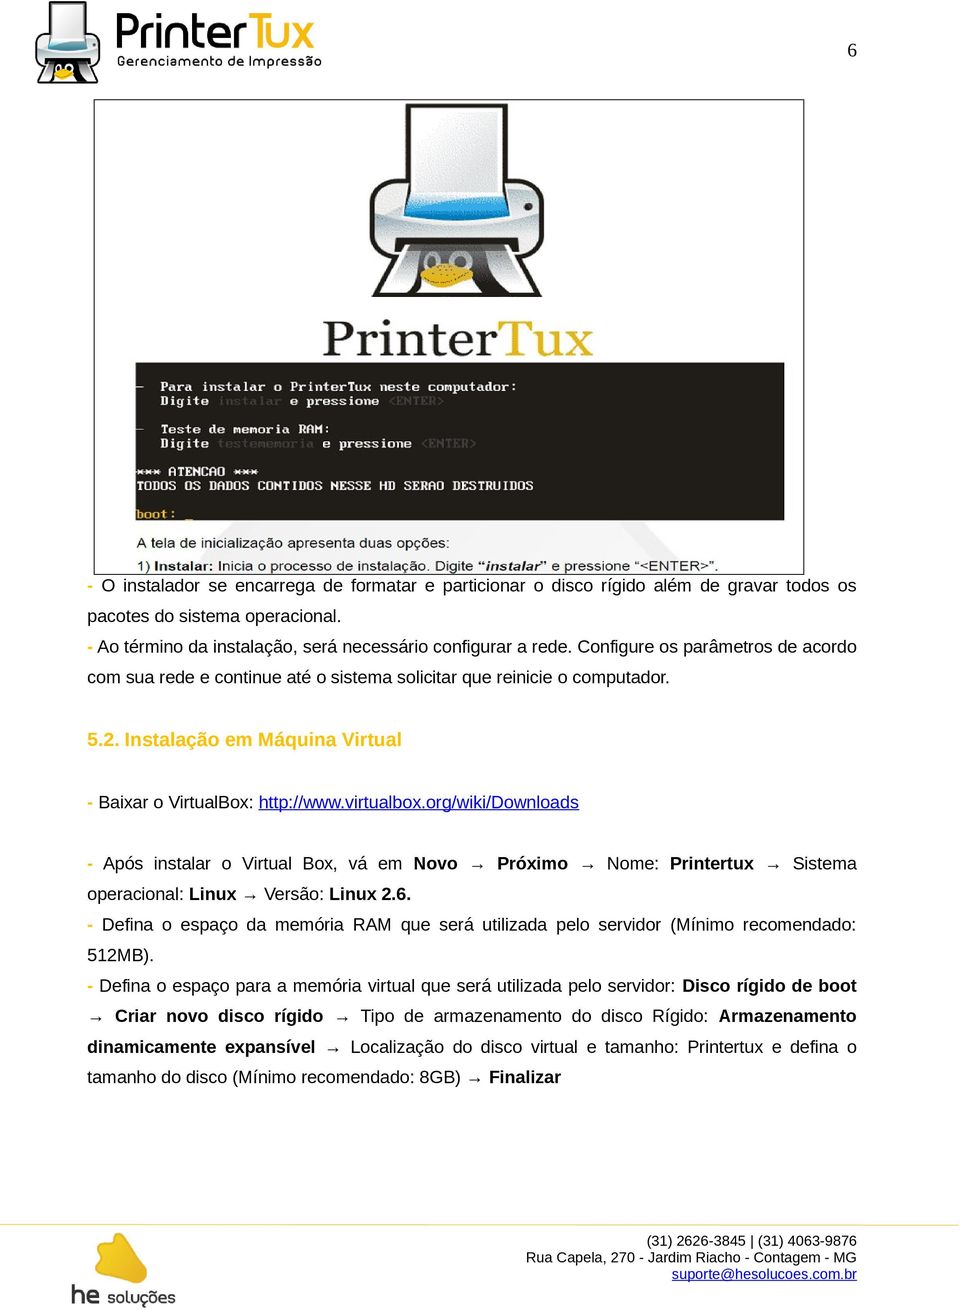 org/wiki/downloads - Após instalar o Virtual Box, vá em Novo Próximo Nome: Printertux Sistema operacional: Linux Versão: Linux 2.6.